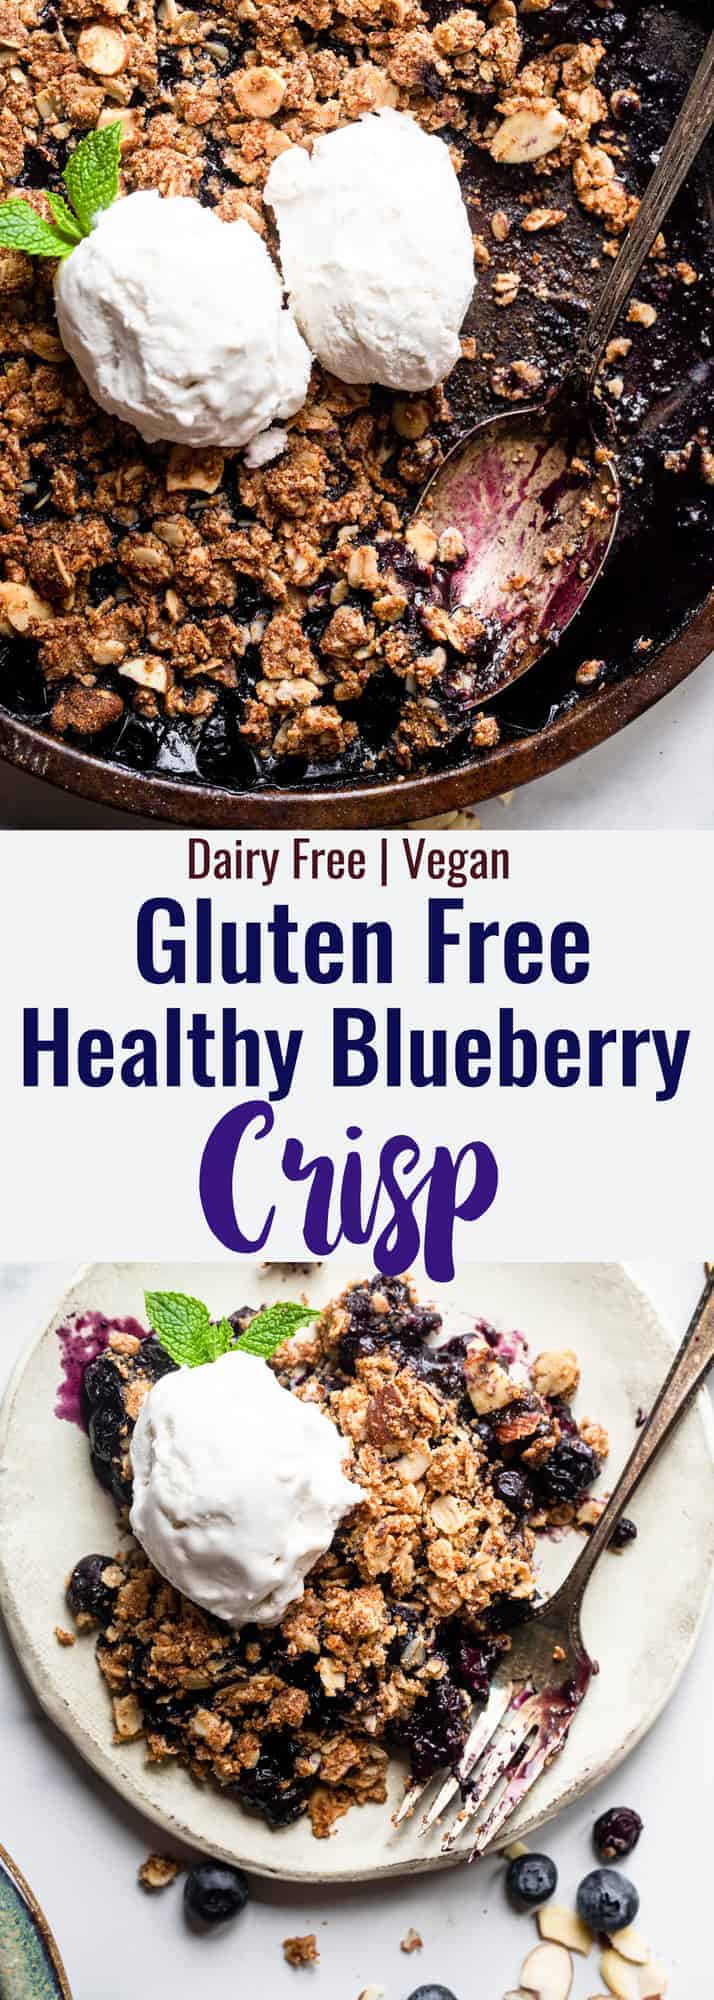 Gluten Free Blueberry Crisp collage photo